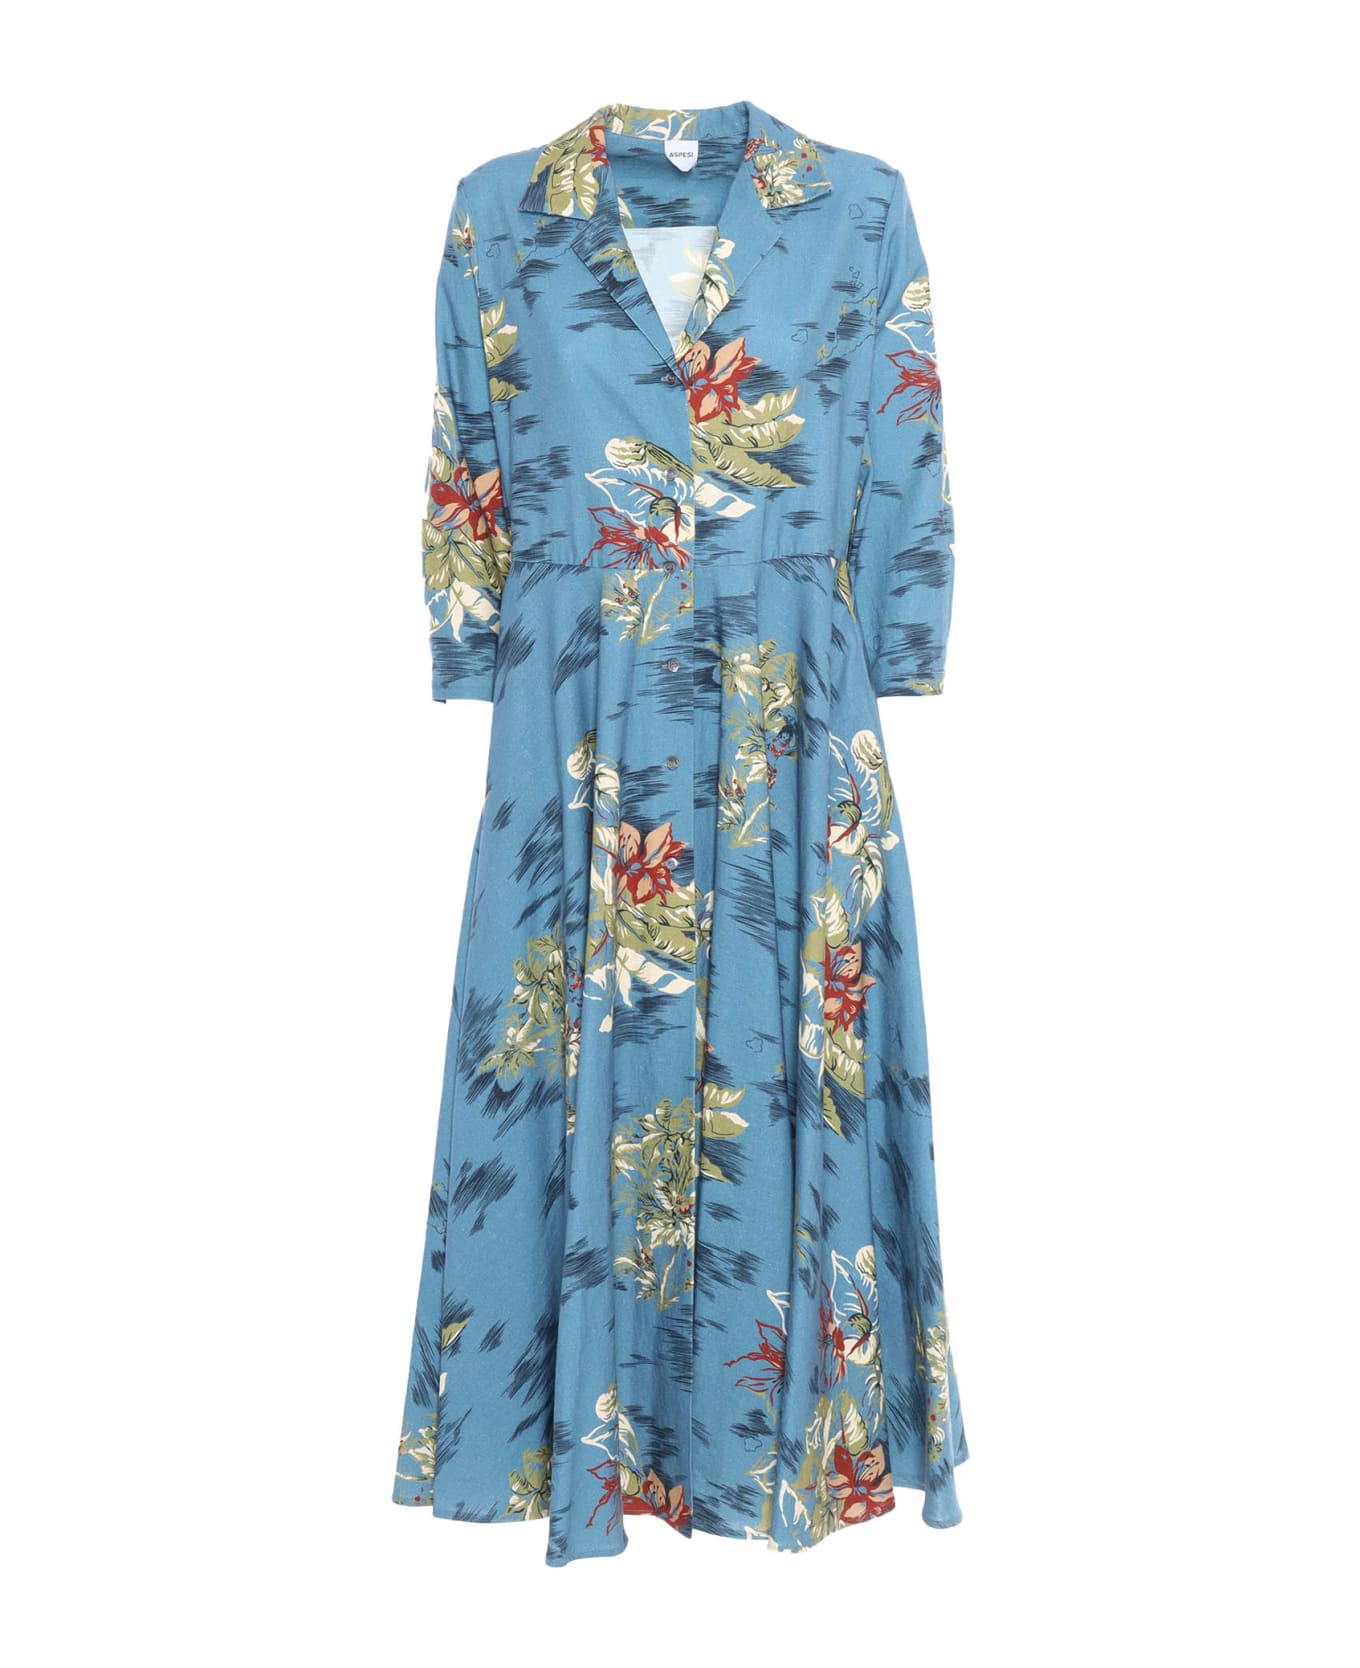 Aspesi Floral Blue Dress - LIGHT BLUE